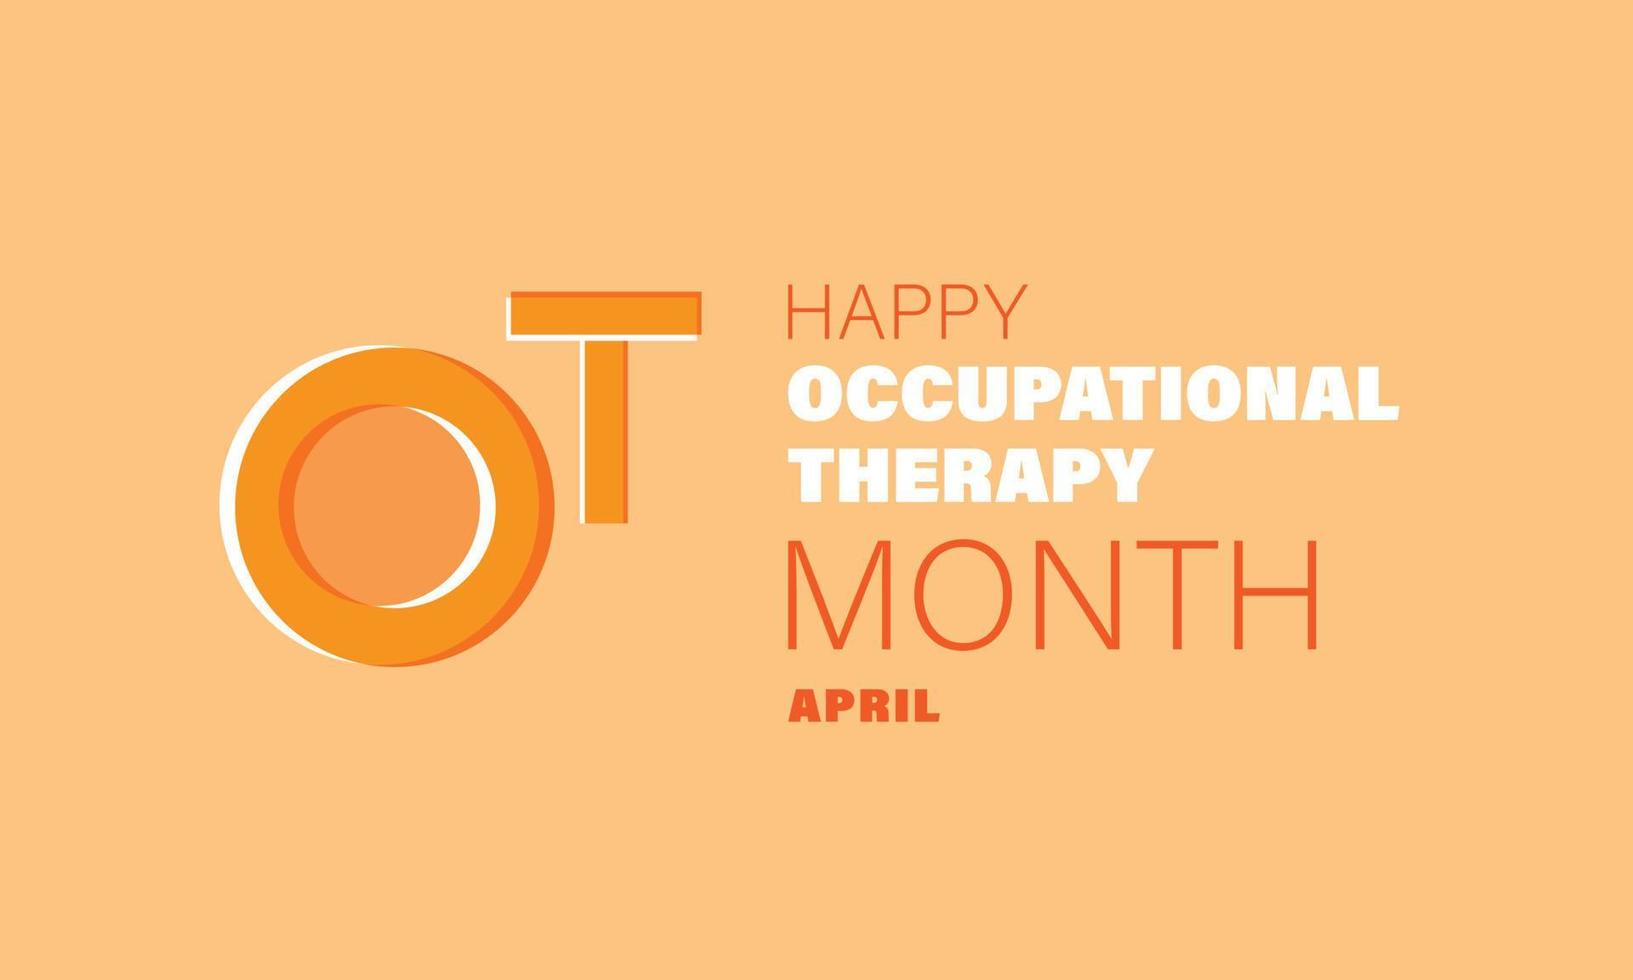 abril es nacional ocupacional terapia mes. modelo para fondo, bandera, tarjeta, póster vector